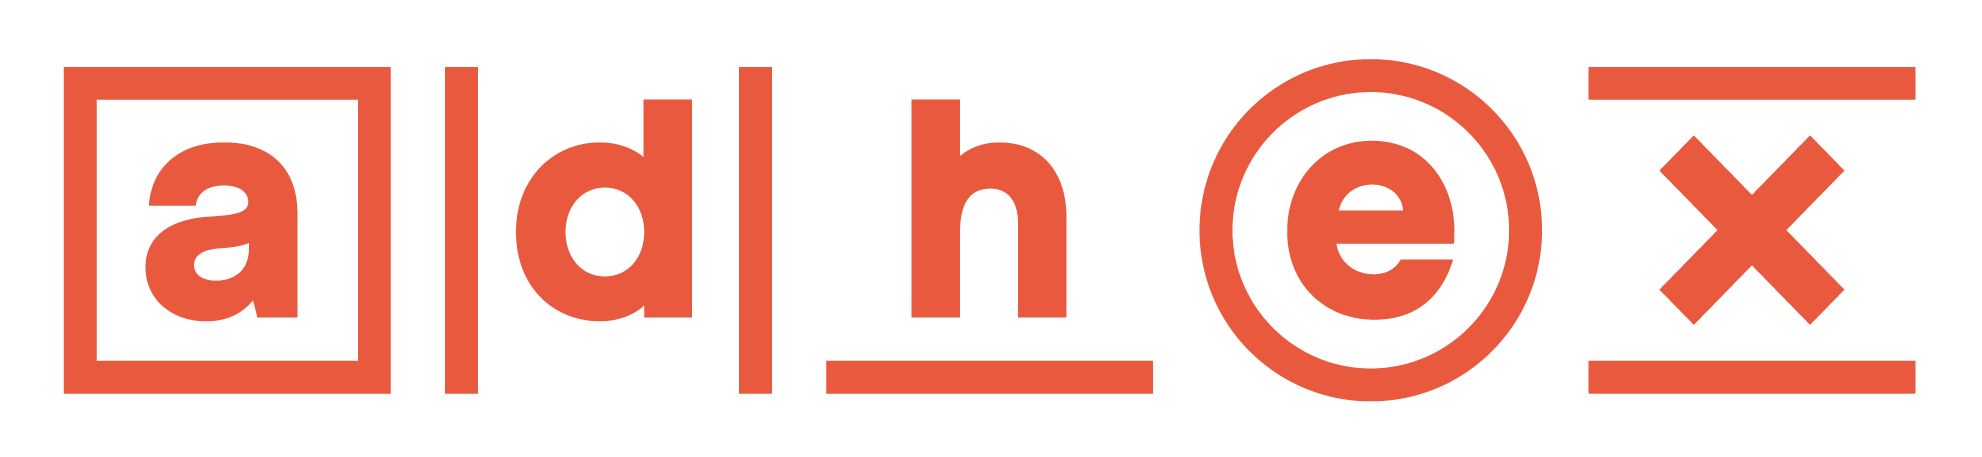 logo Adhex